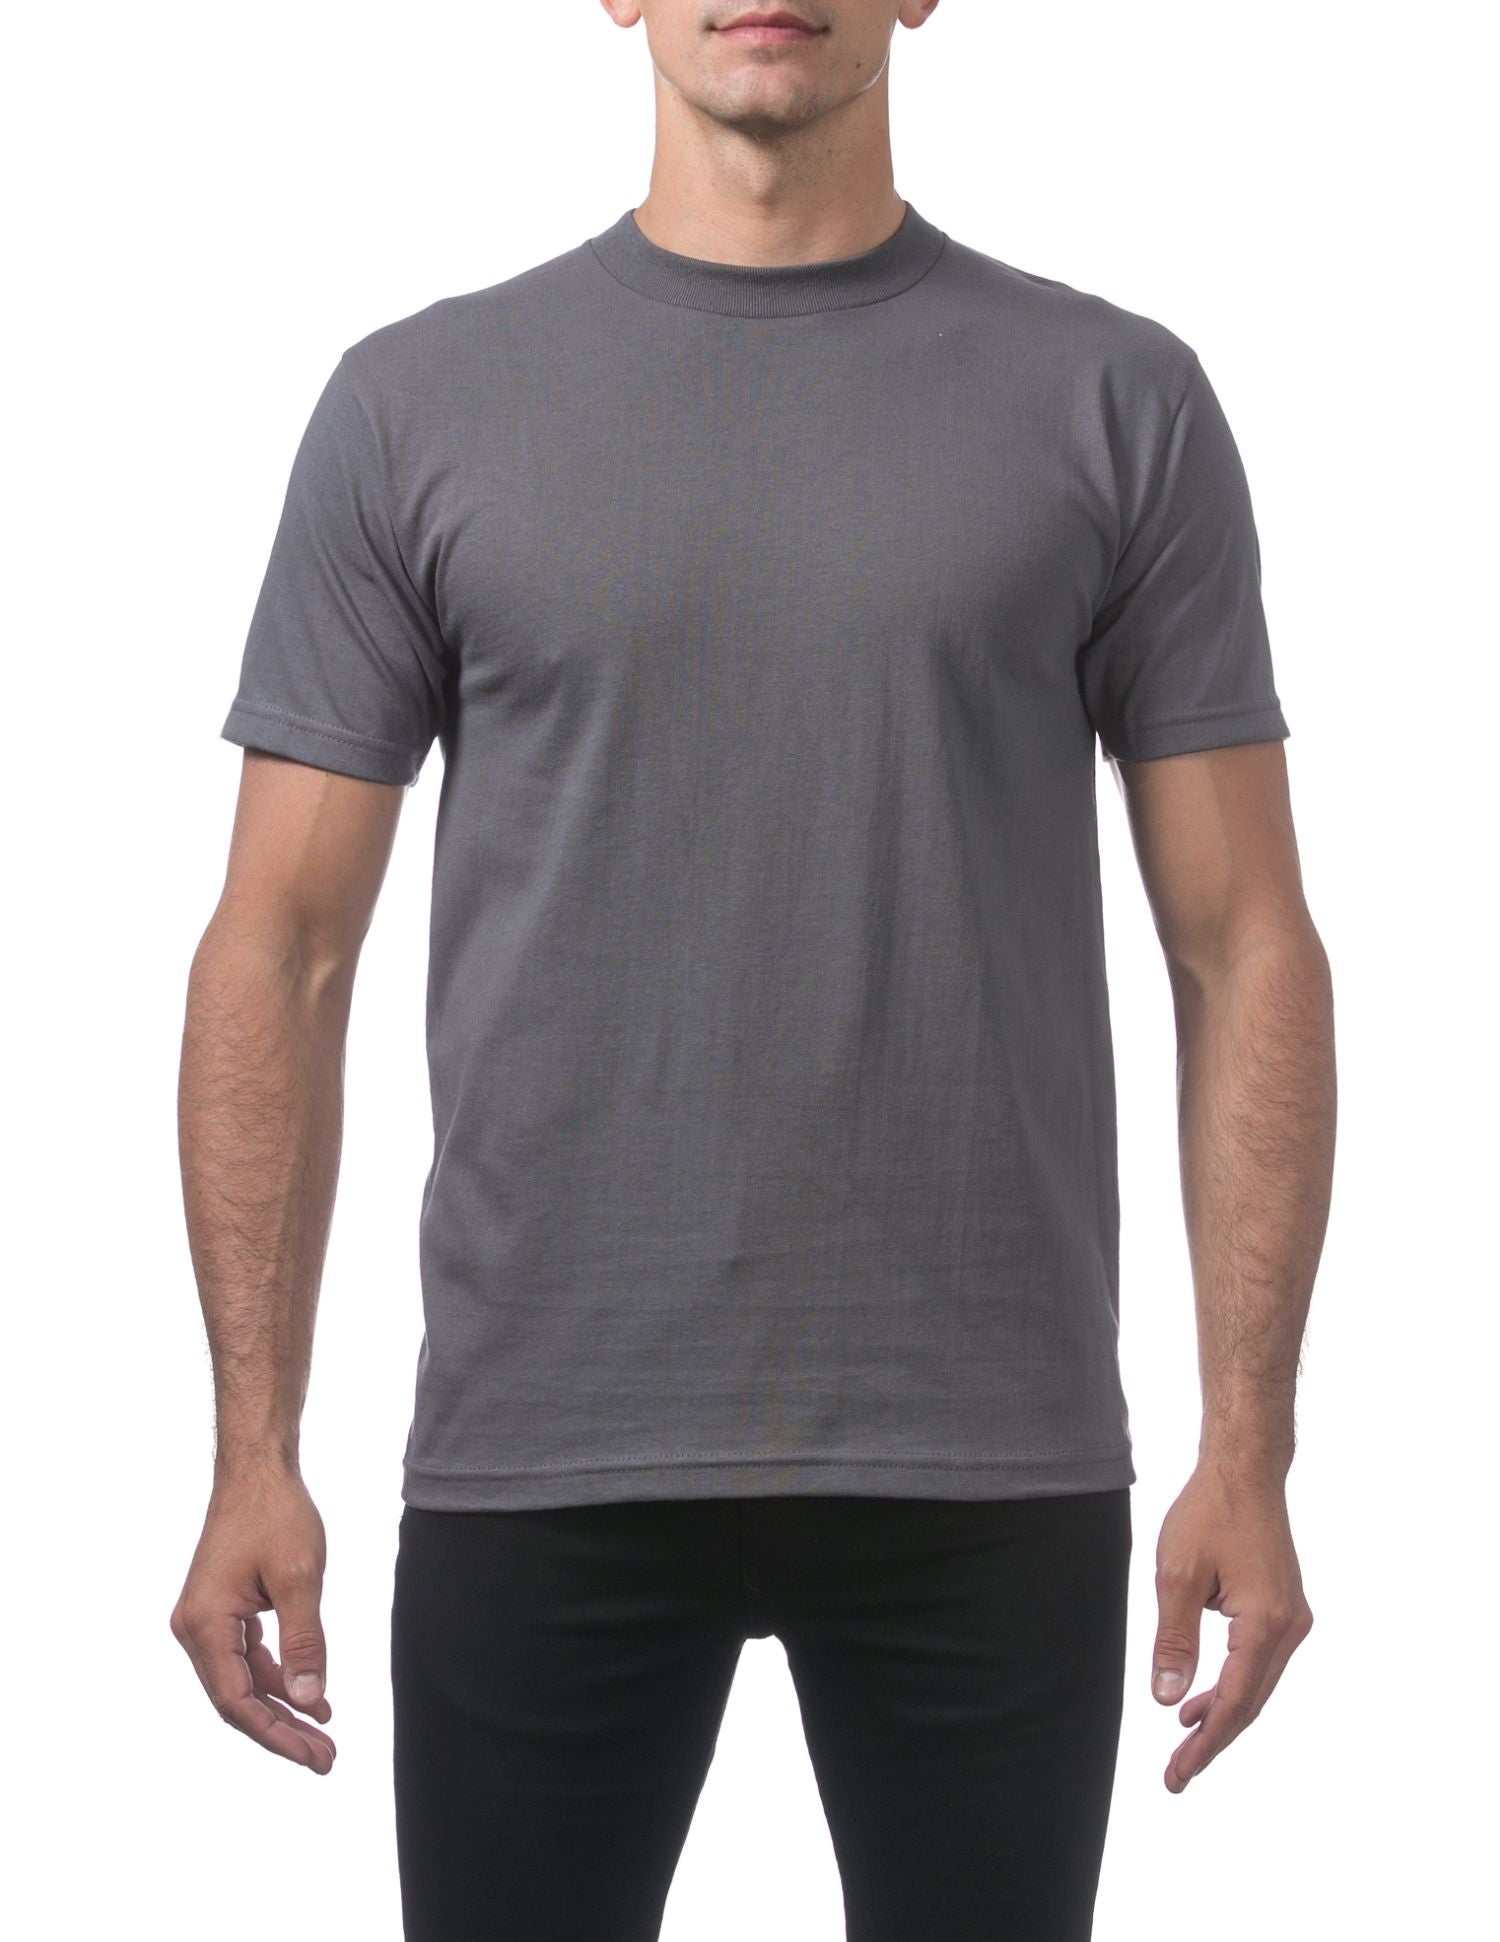 Pro Club Men's Comfort Cotton Short Sleeve T-Shirt - Graphite - Small - Pro-Distributing